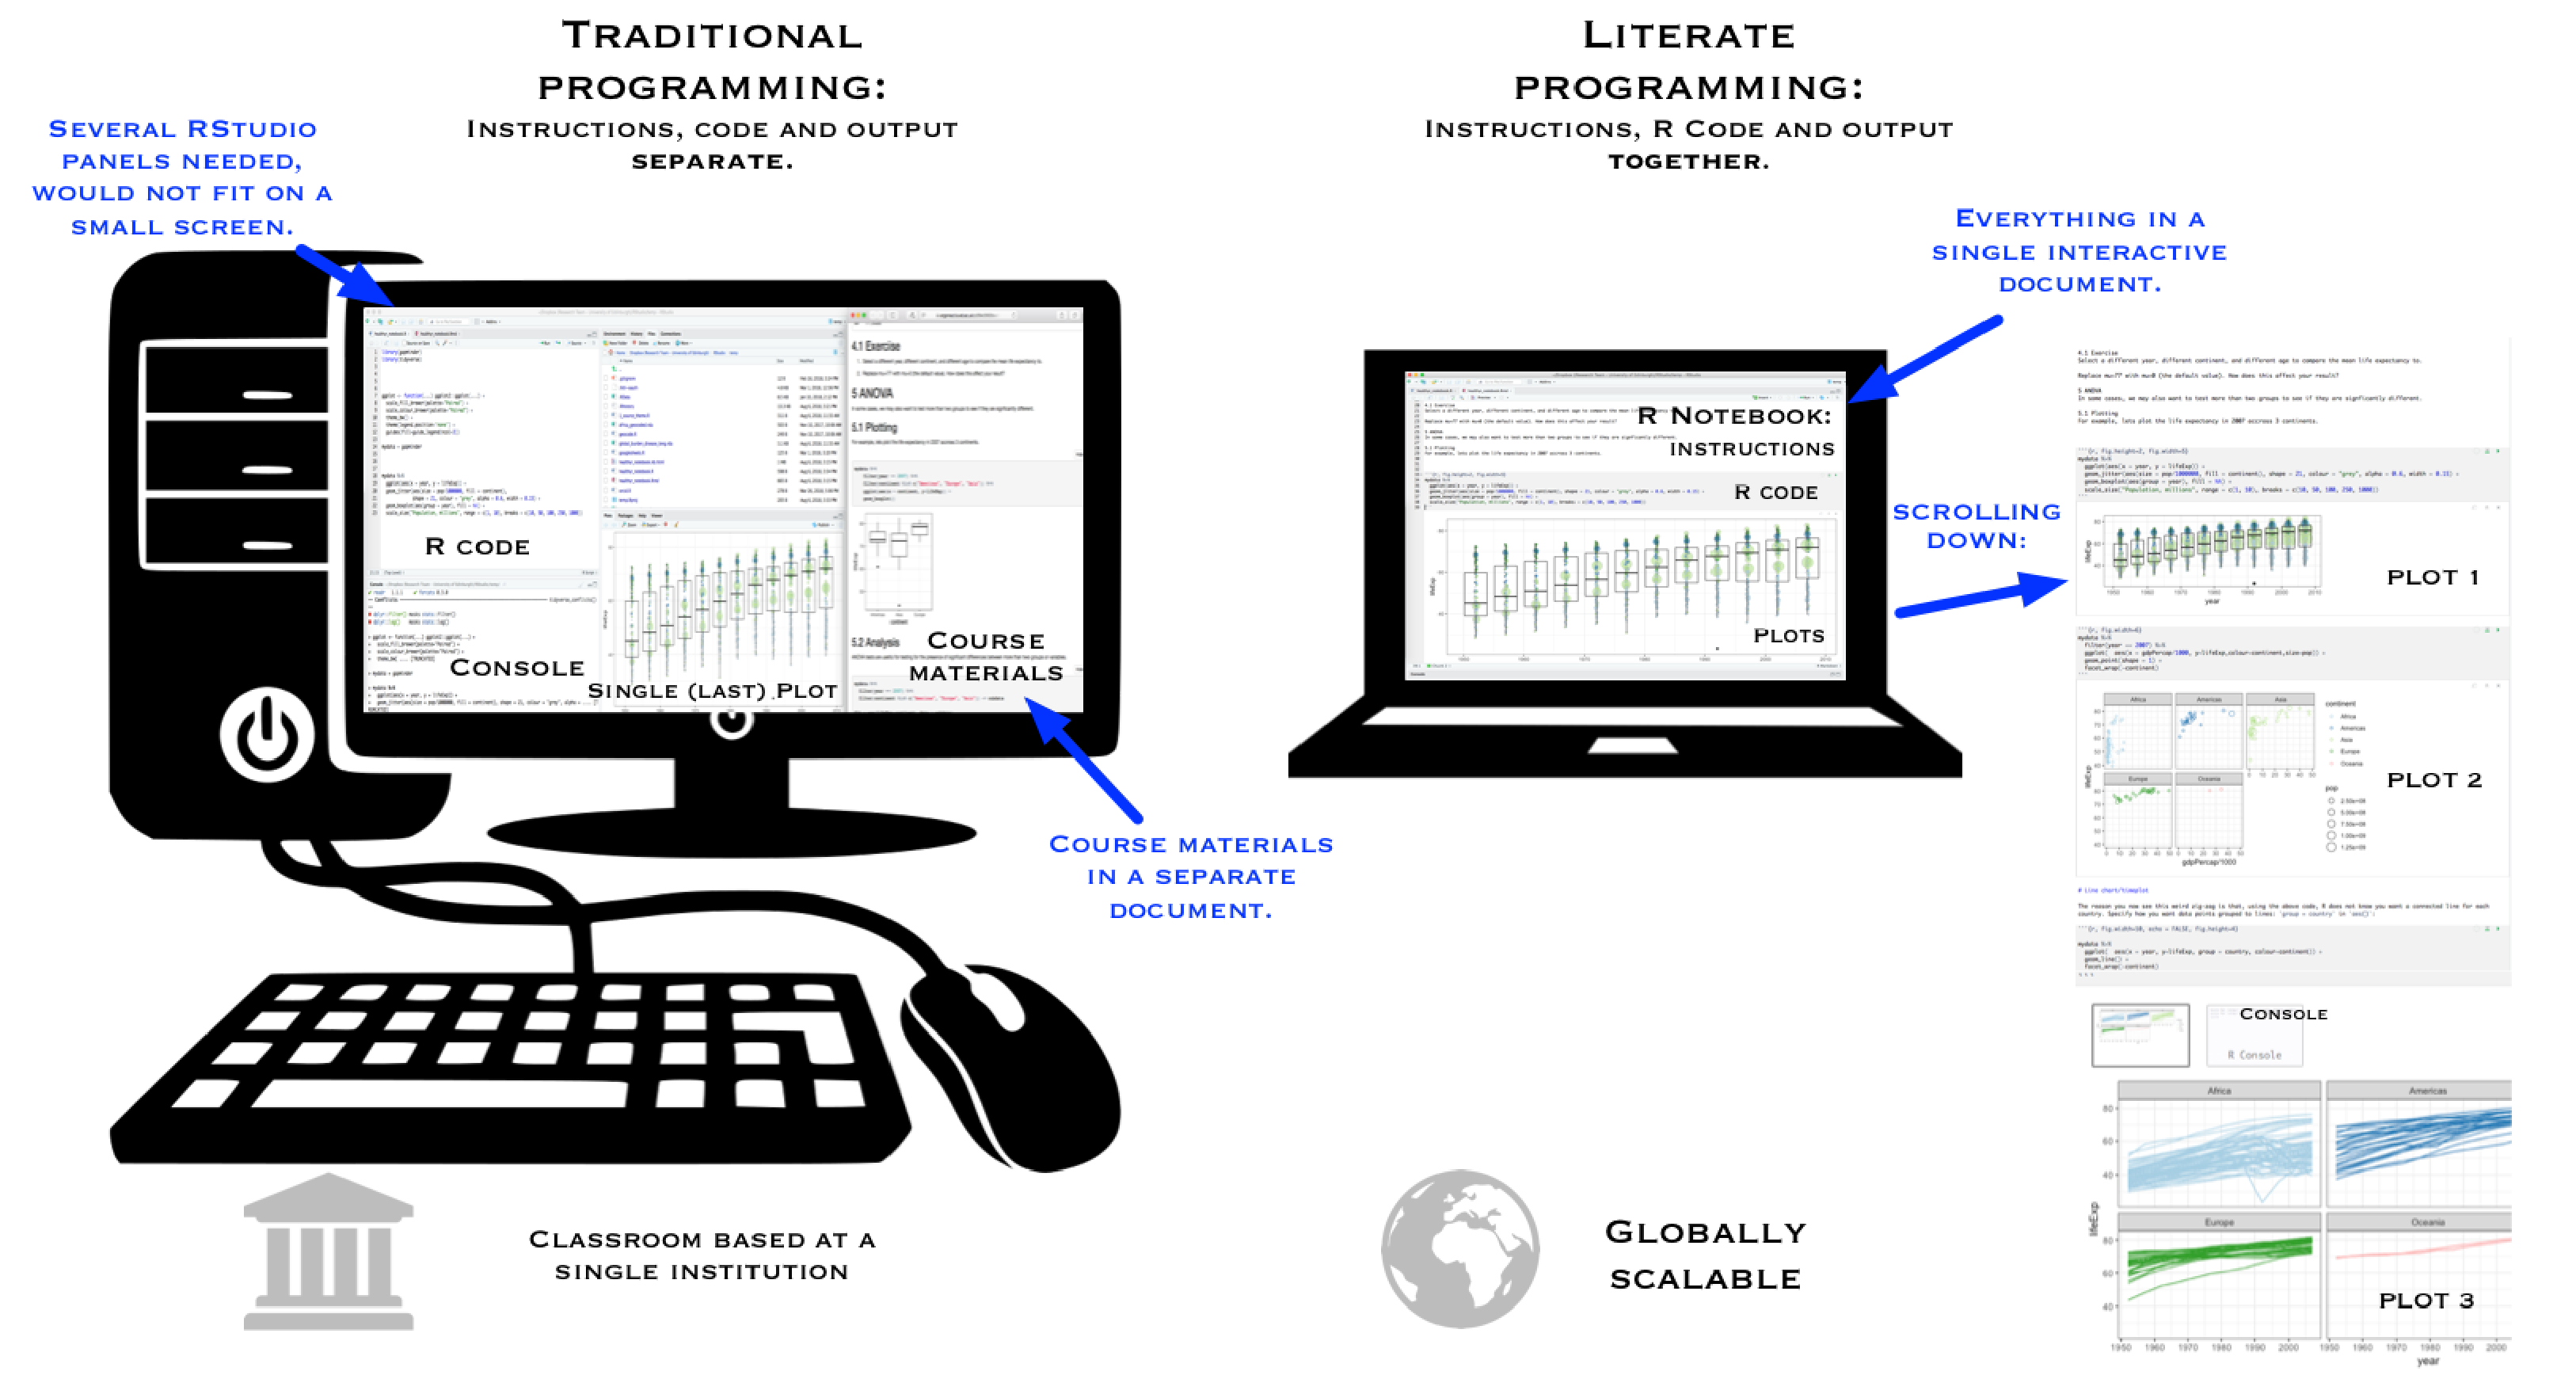 Traditional versus literate programming using Notebooks.